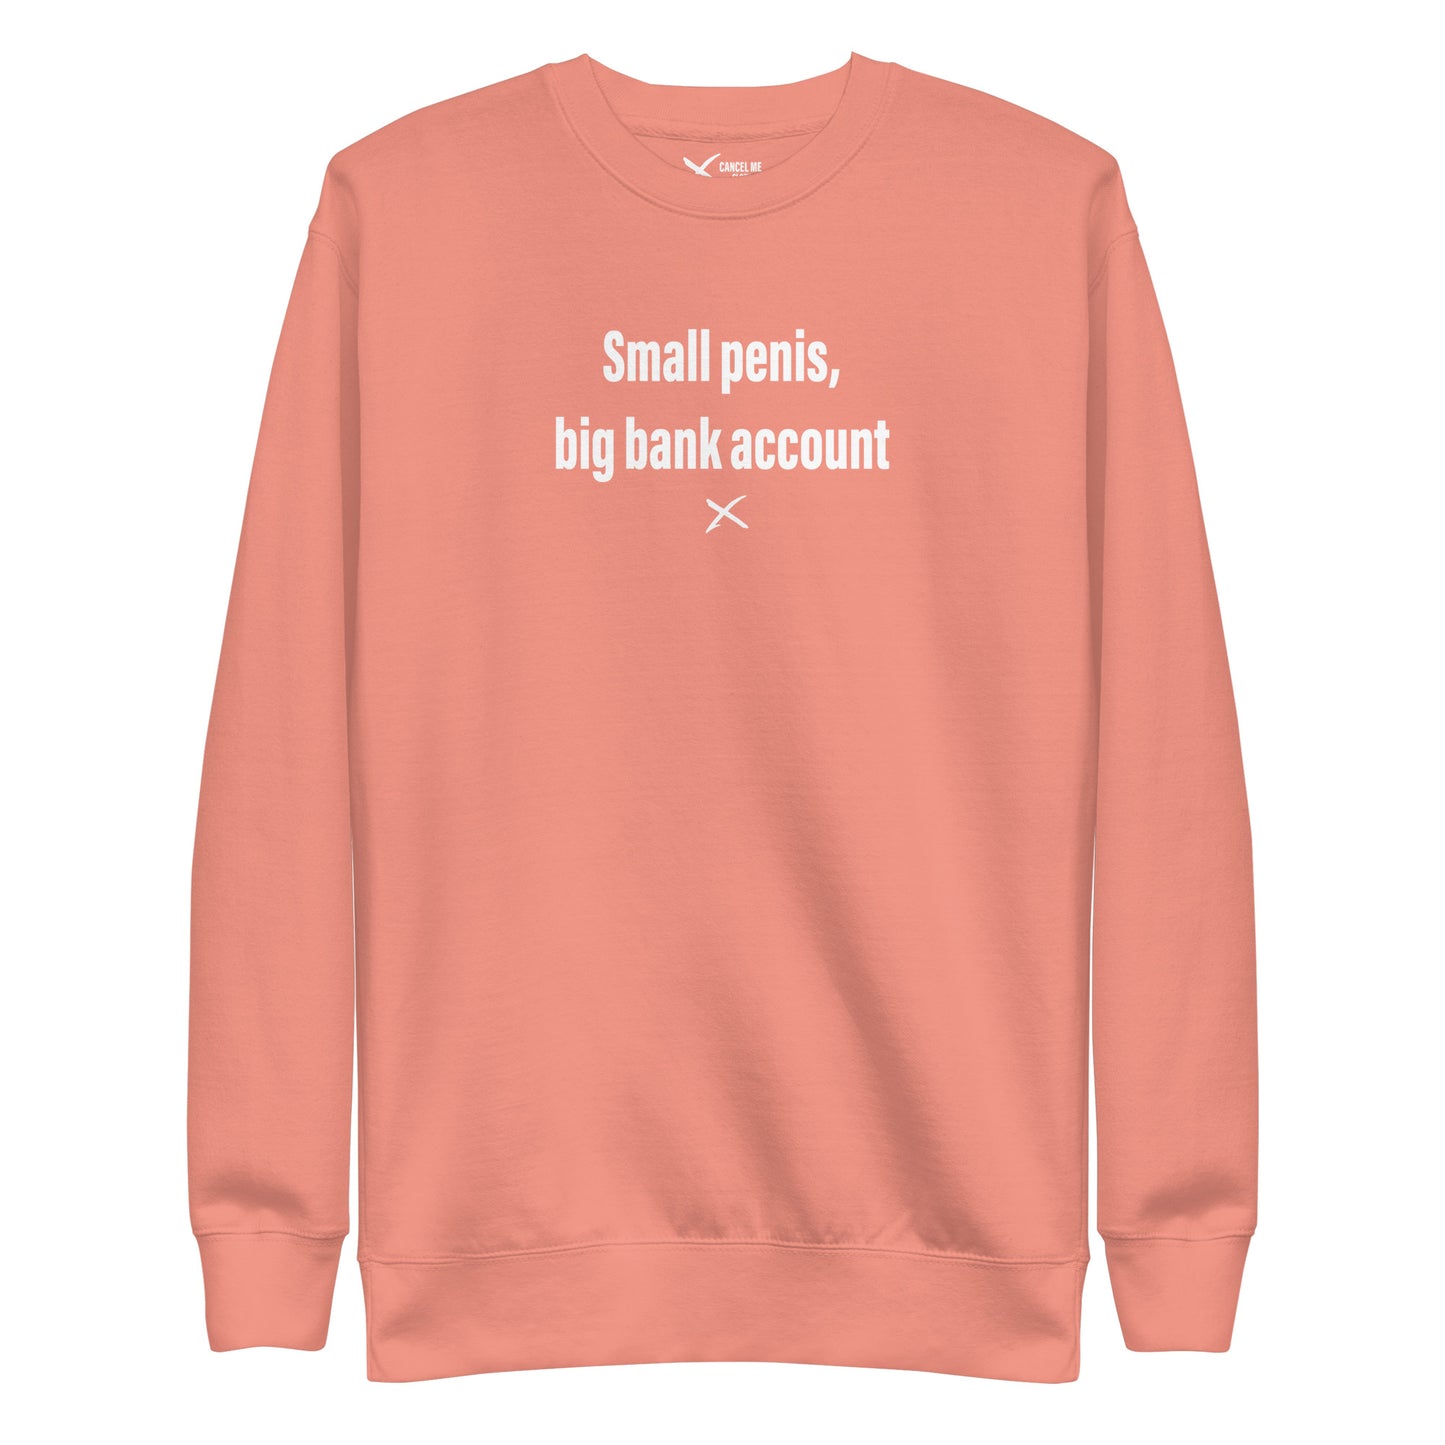 Small penis, big bank account - Sweatshirt